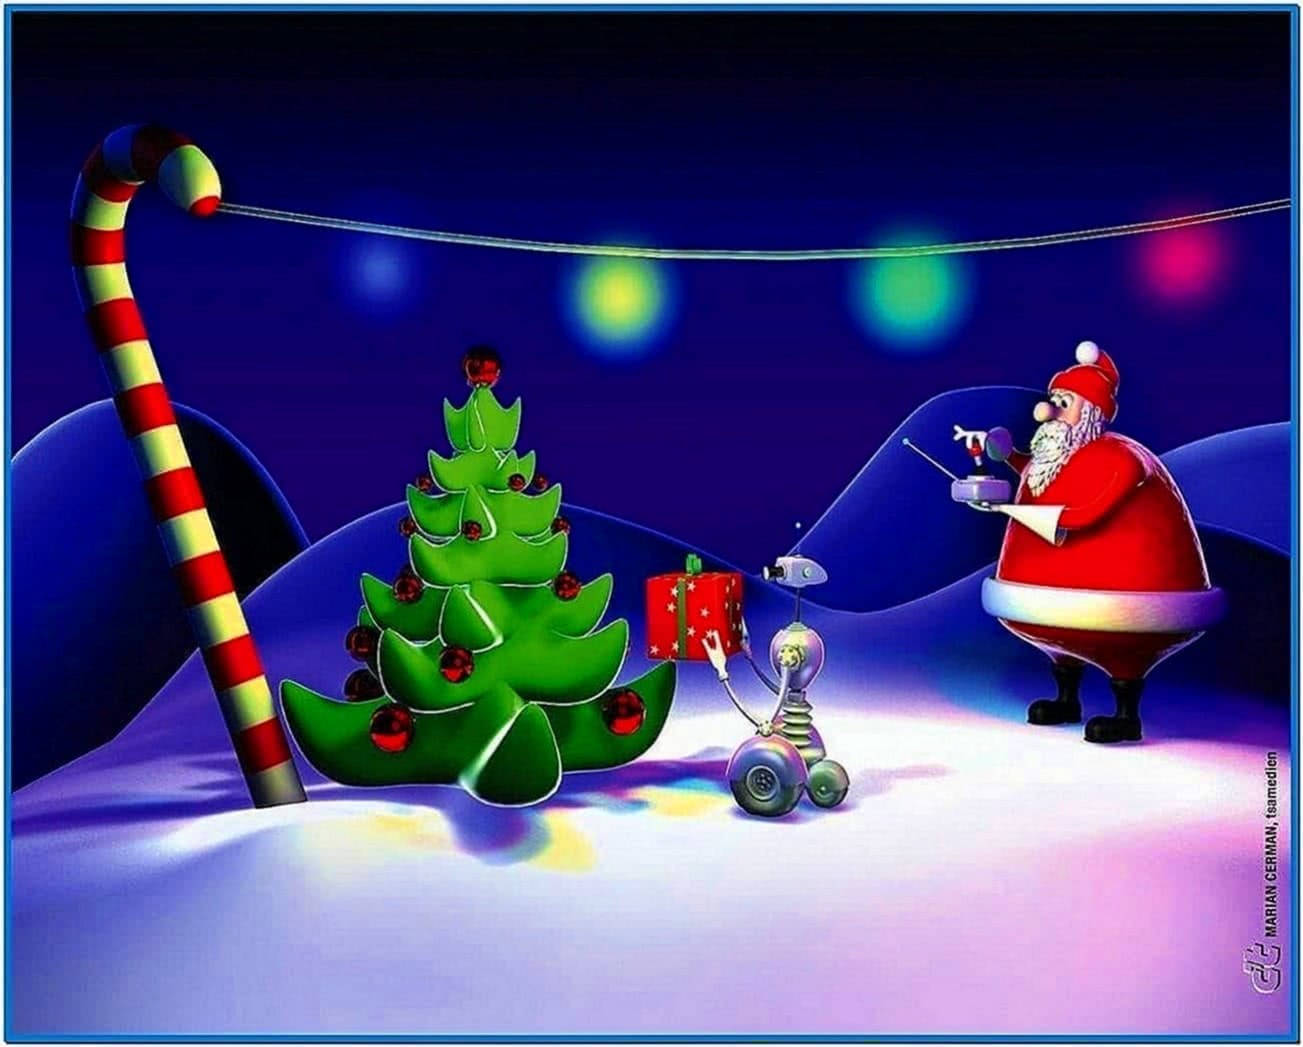 3D Animated Christmas Screensavers and Wallpaper